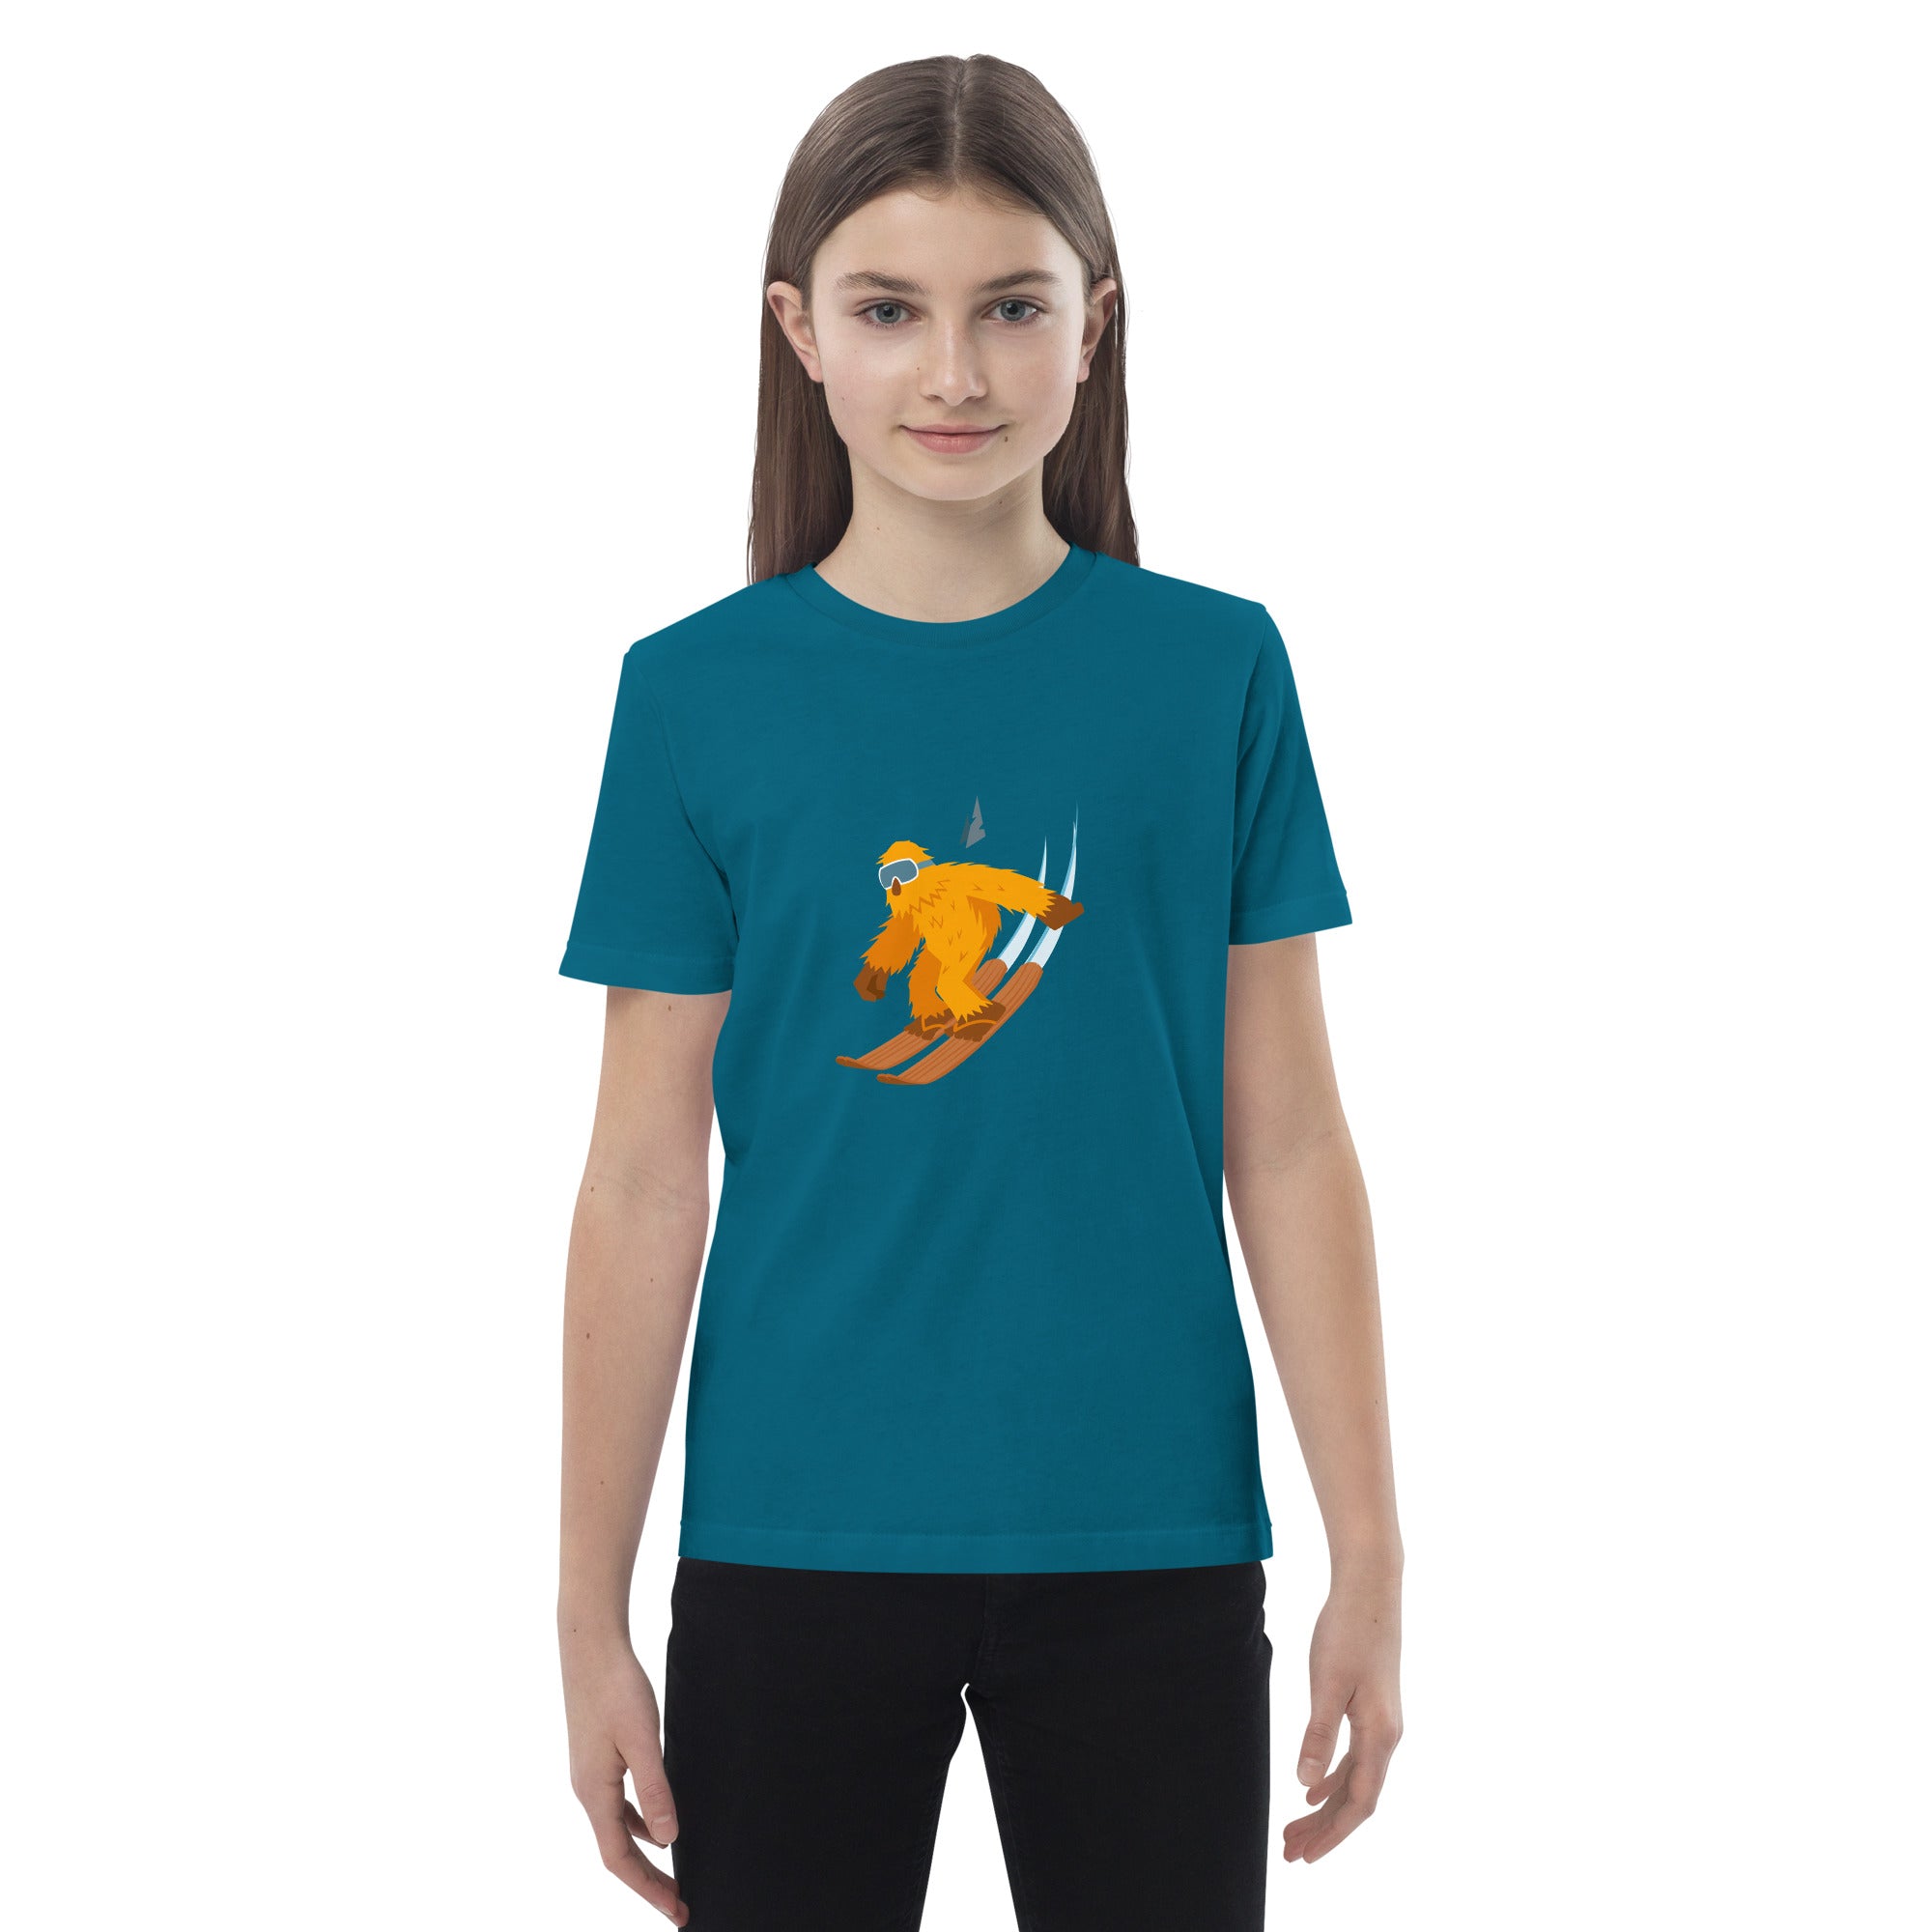 T-shirt en coton bio enfant "The Thing" Yeti Skier